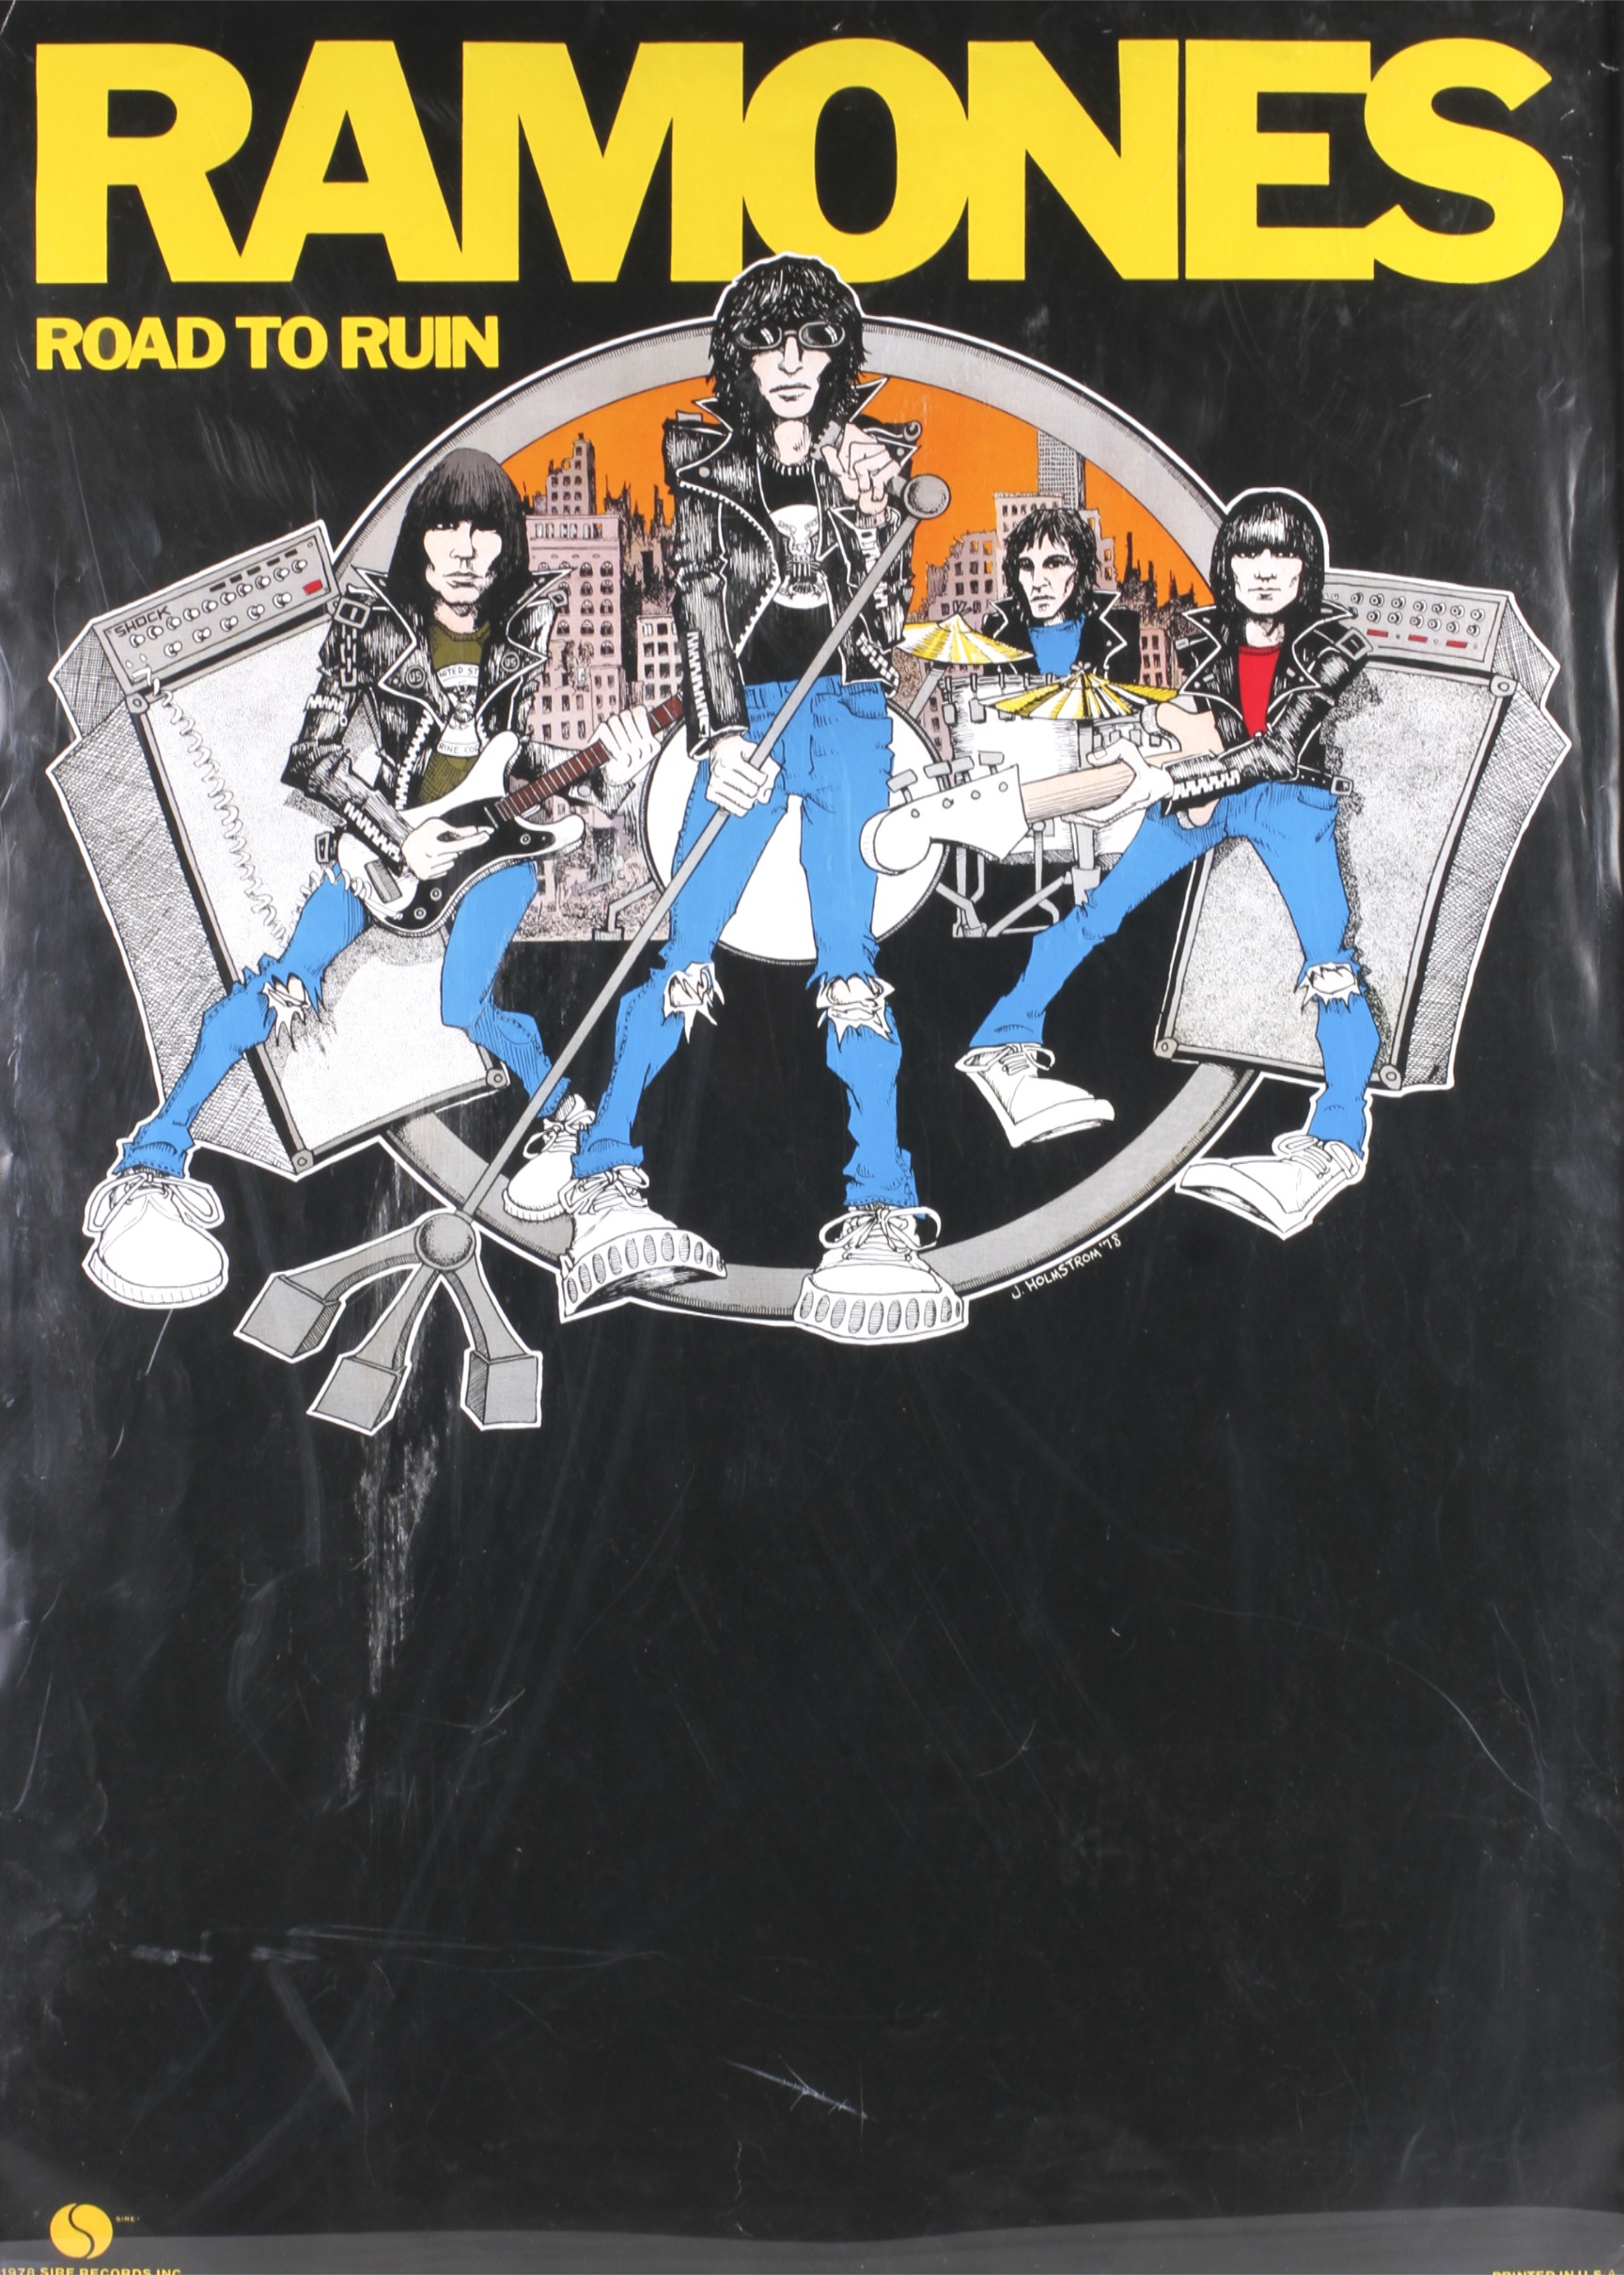 A vintage Ramones poster.